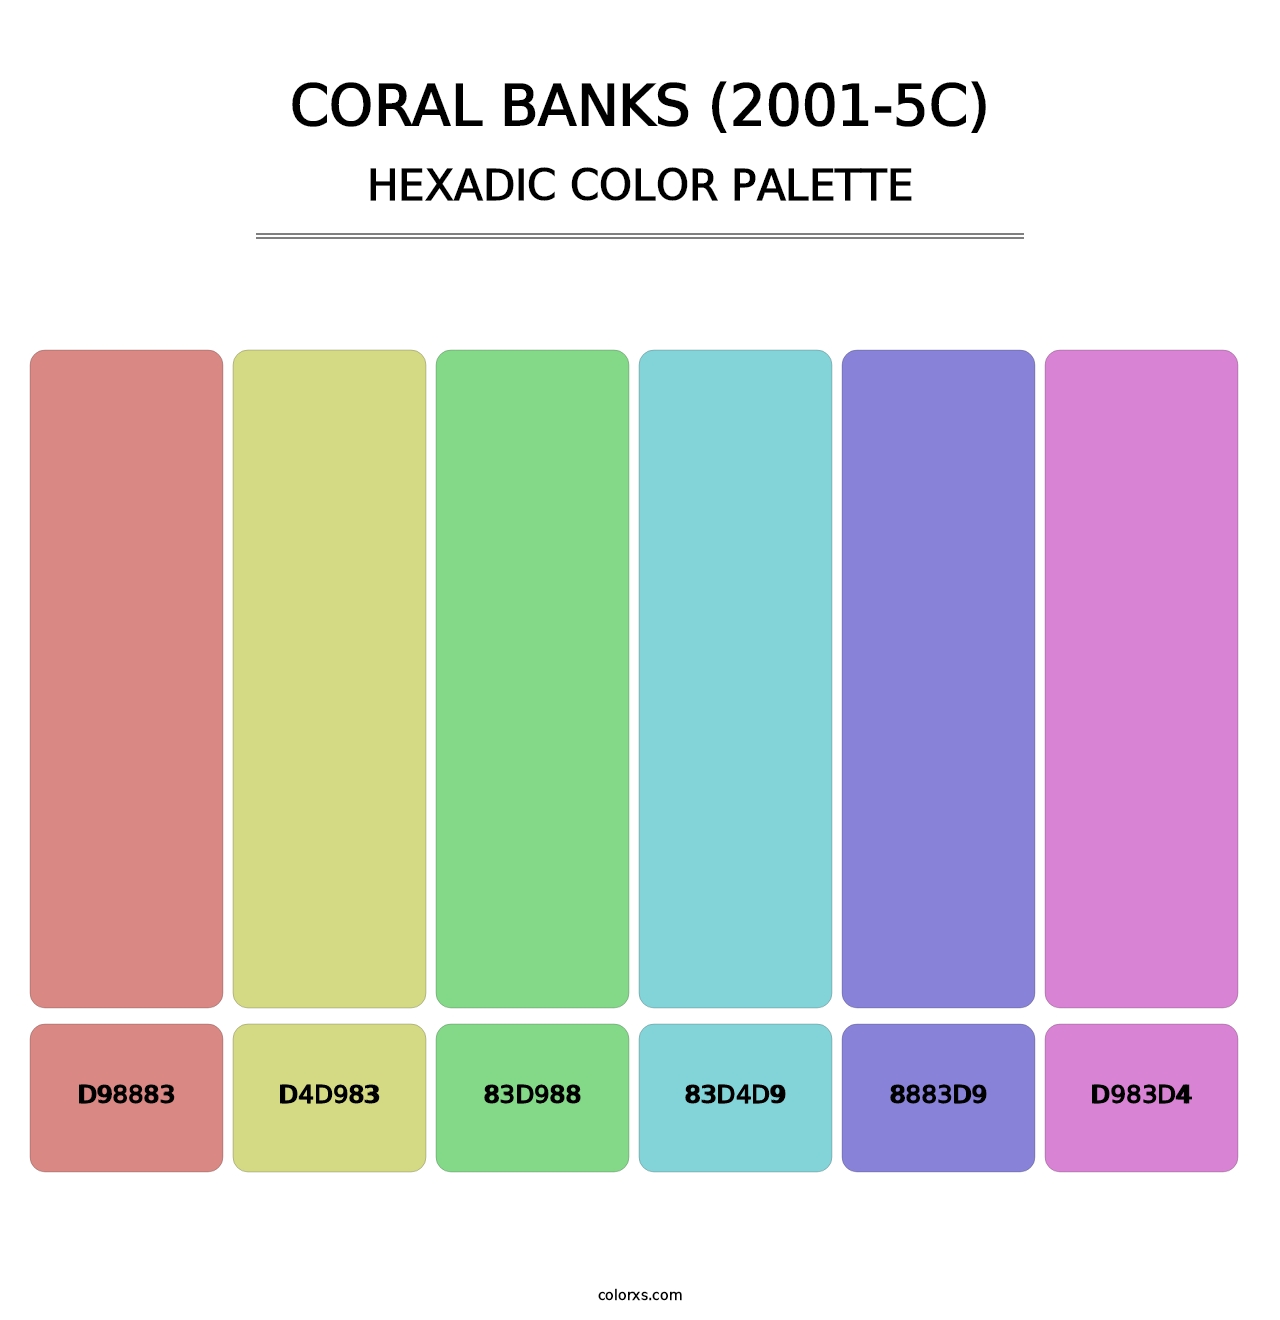 Coral Banks (2001-5C) - Hexadic Color Palette